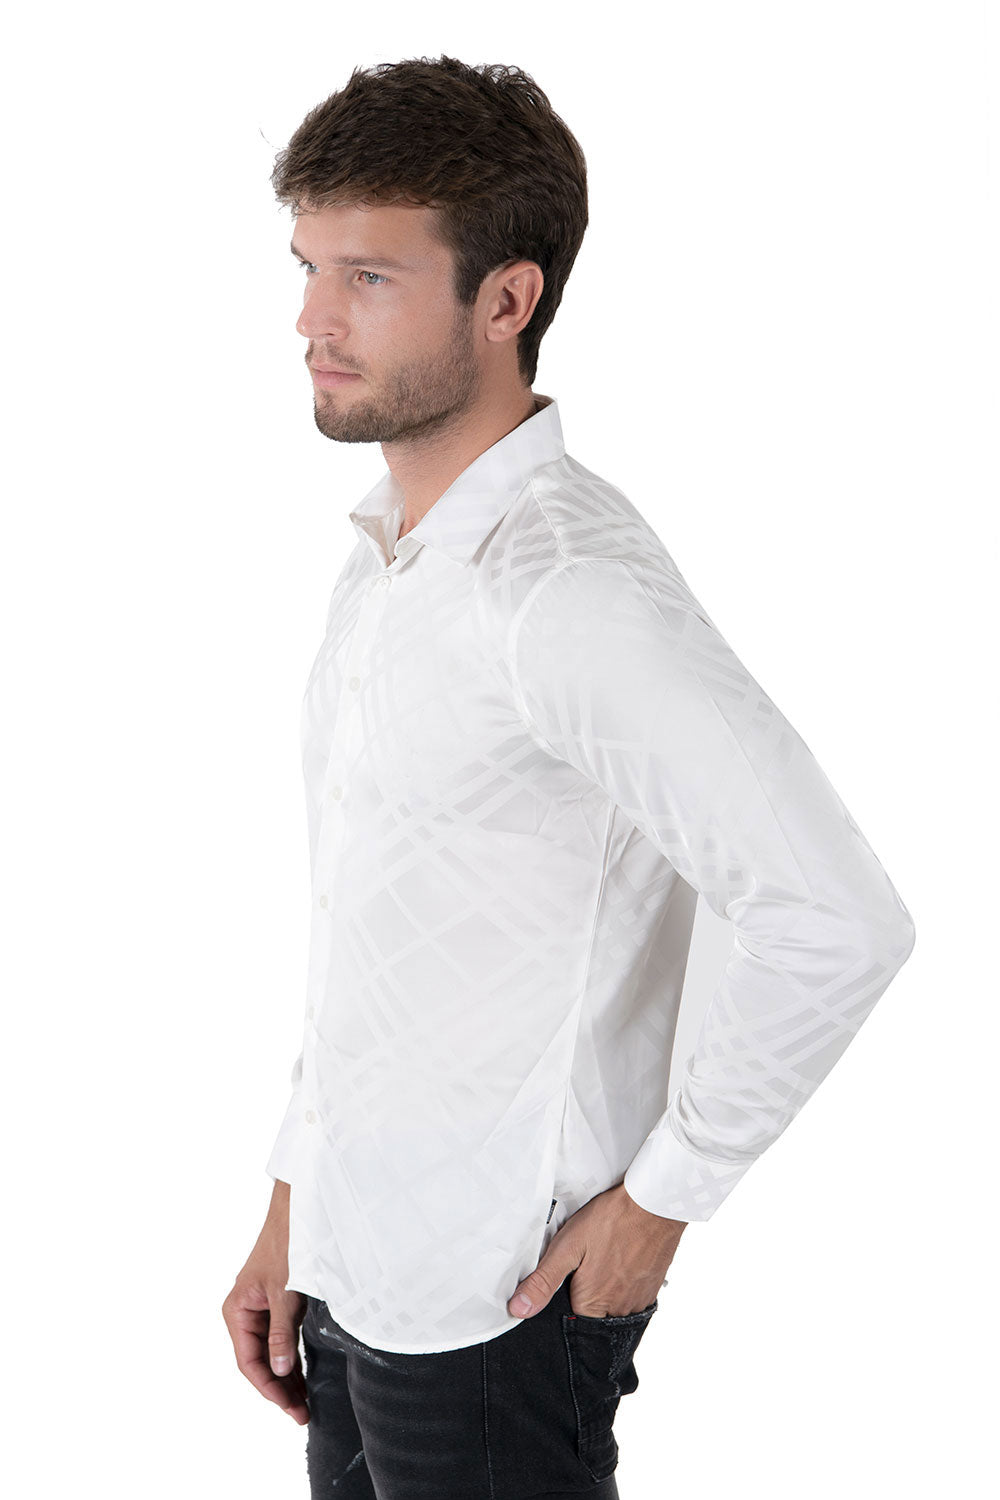 Barabas Men's Textured Diamond Geometric button down dress shirts B319 White